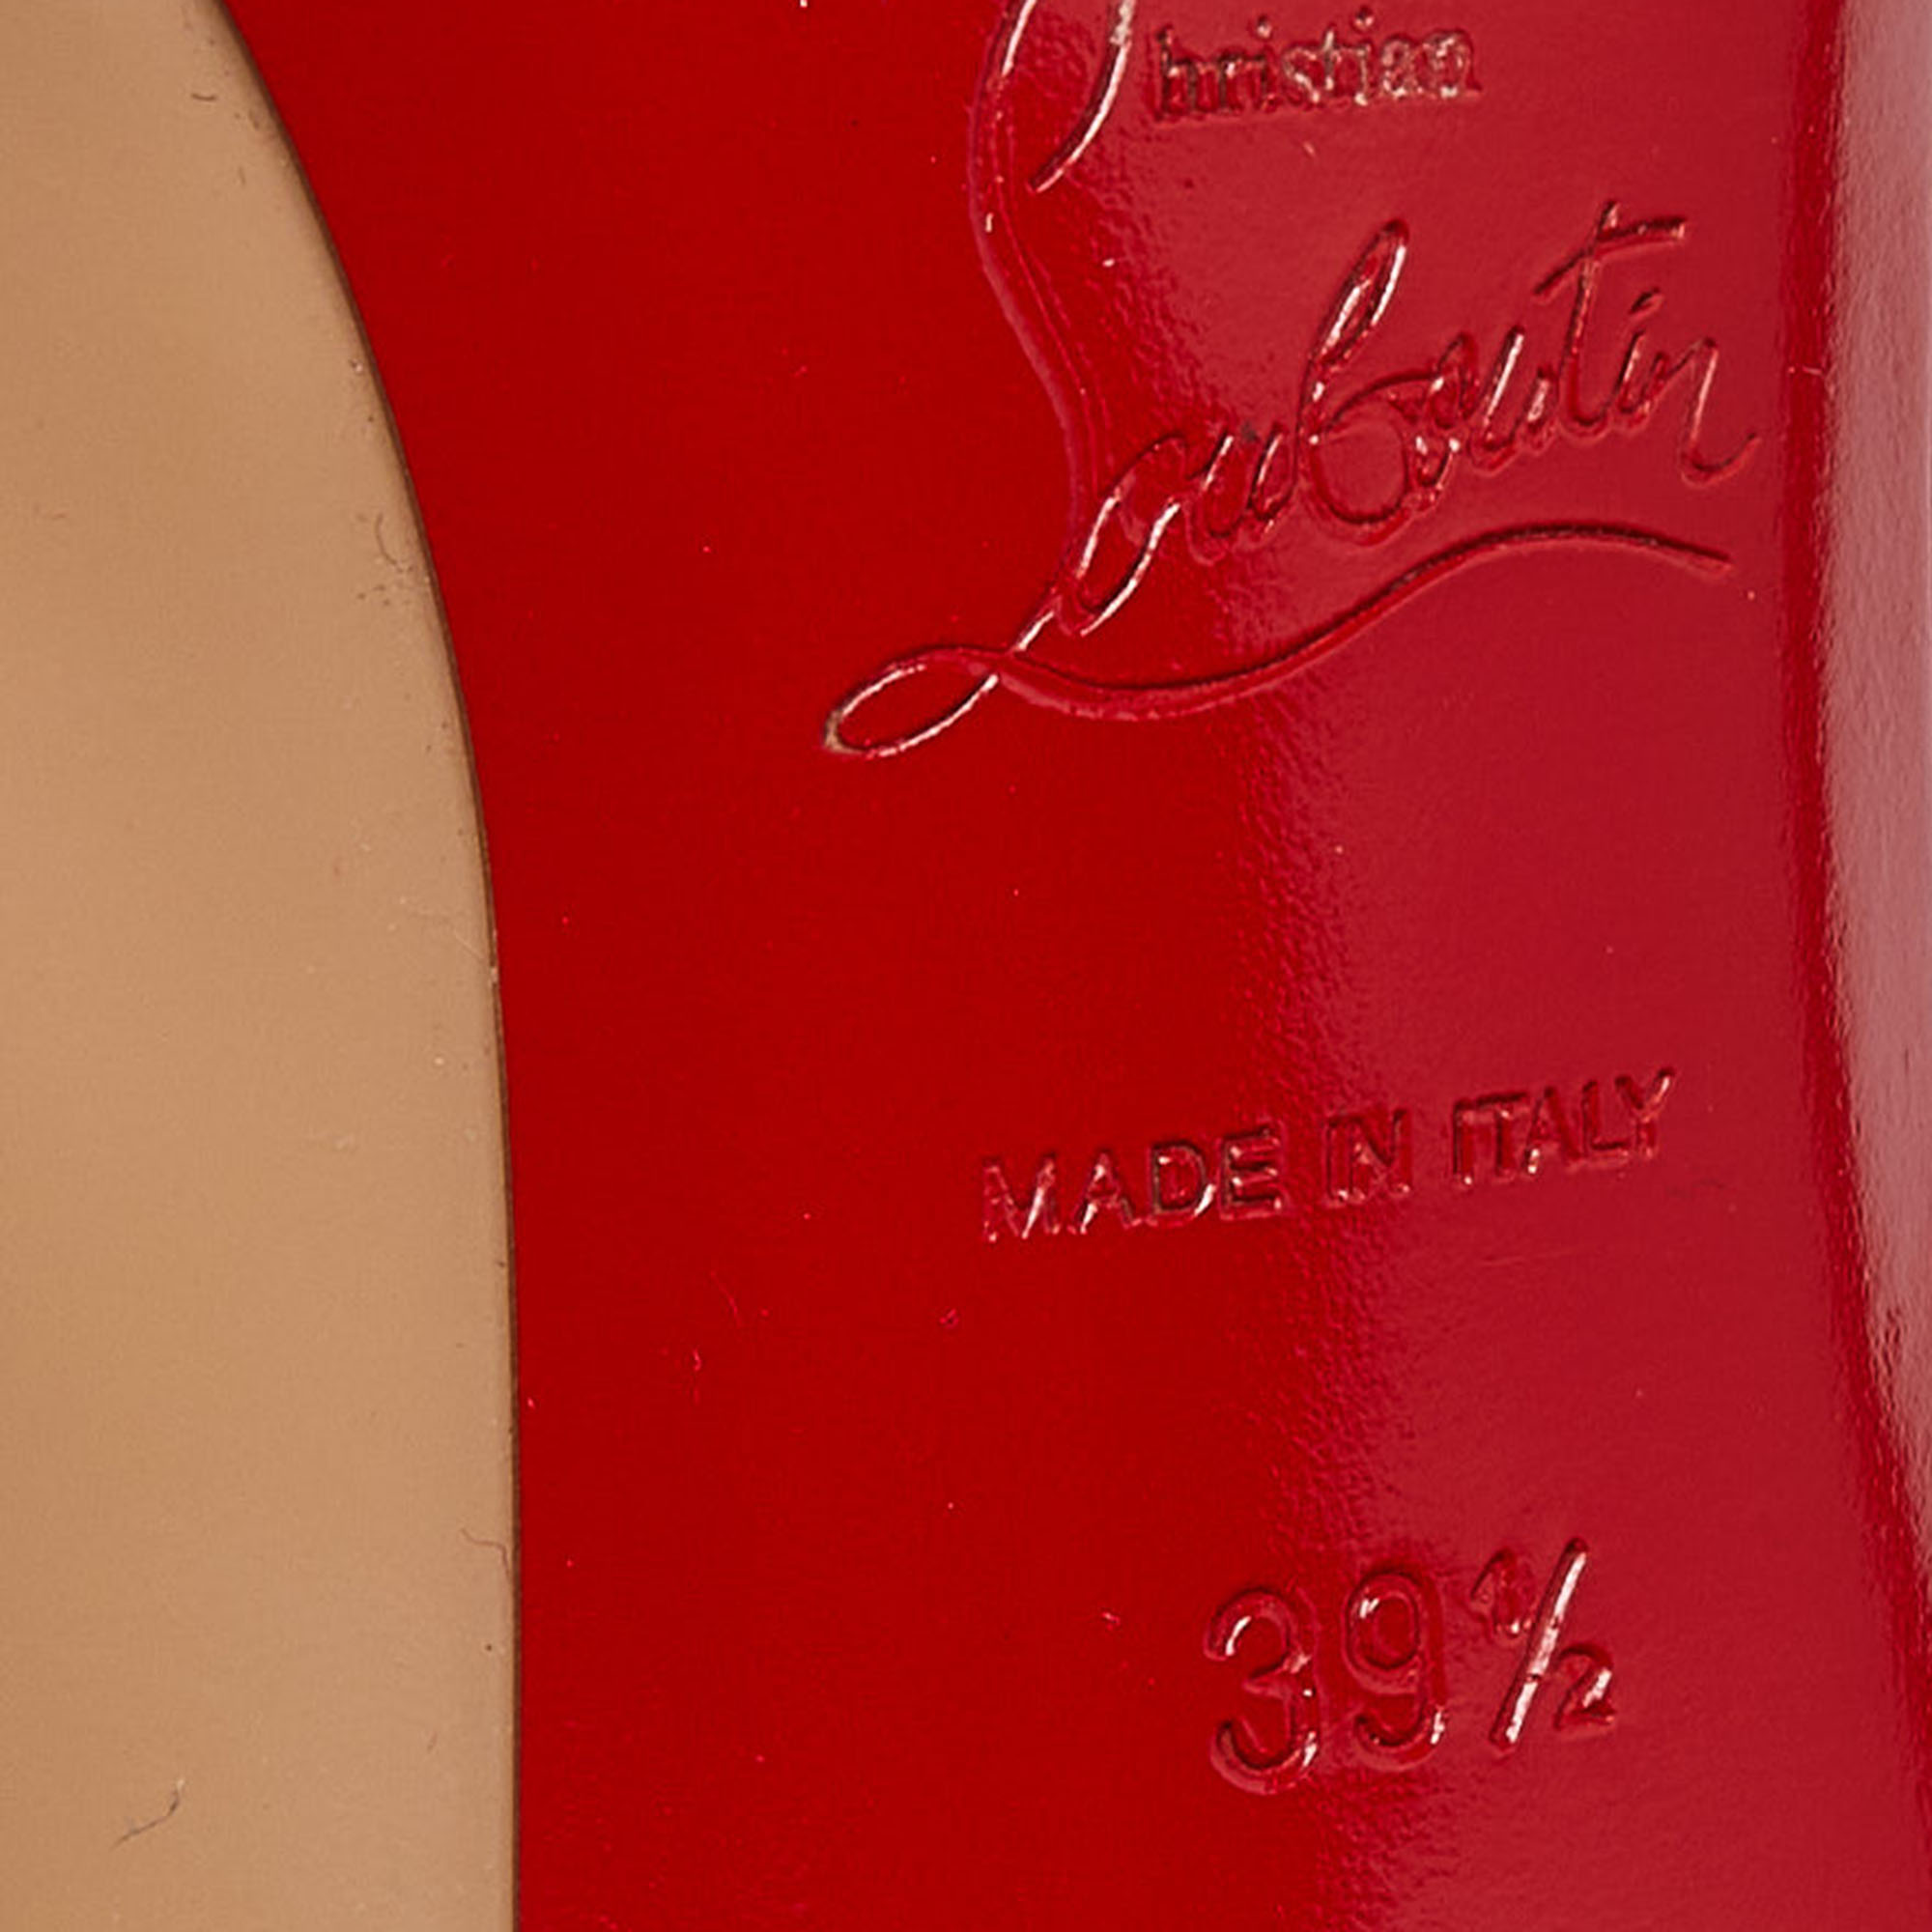 Christian Louboutin Beige Patent Leather New Simple Platform Pumps Size 39.5